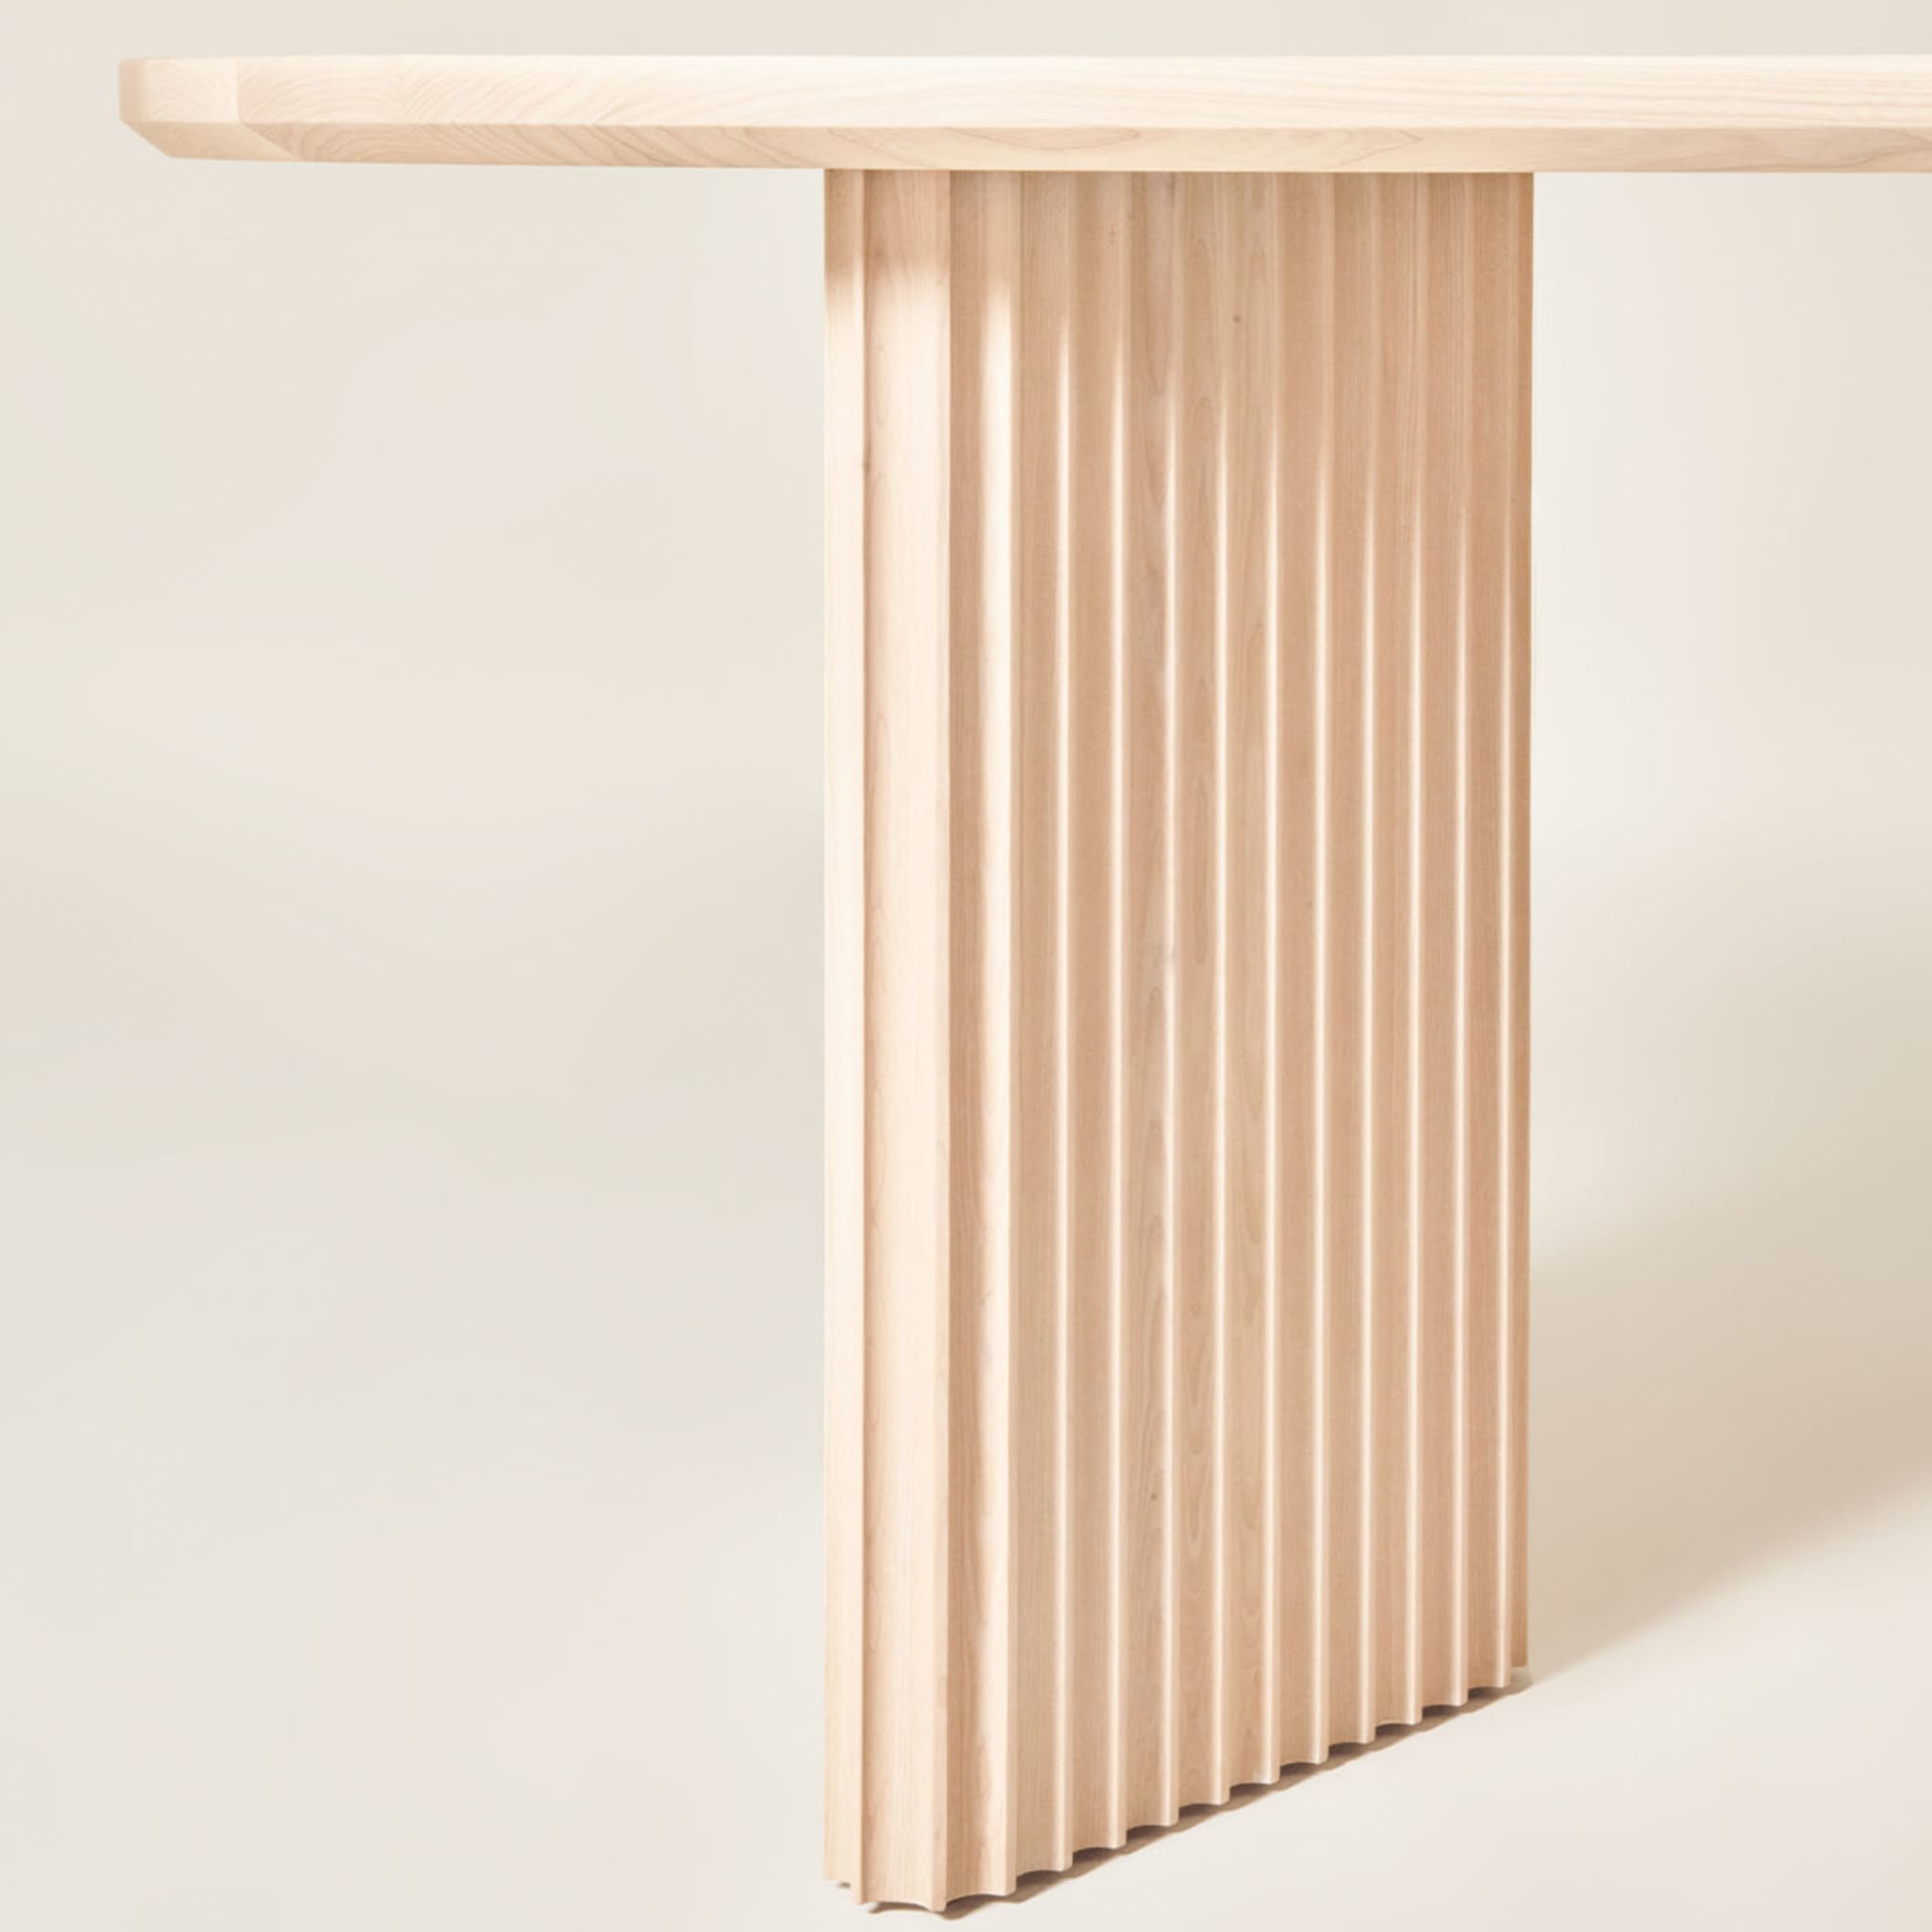 Table Basalto en frêne naturel - Vue alternative 3